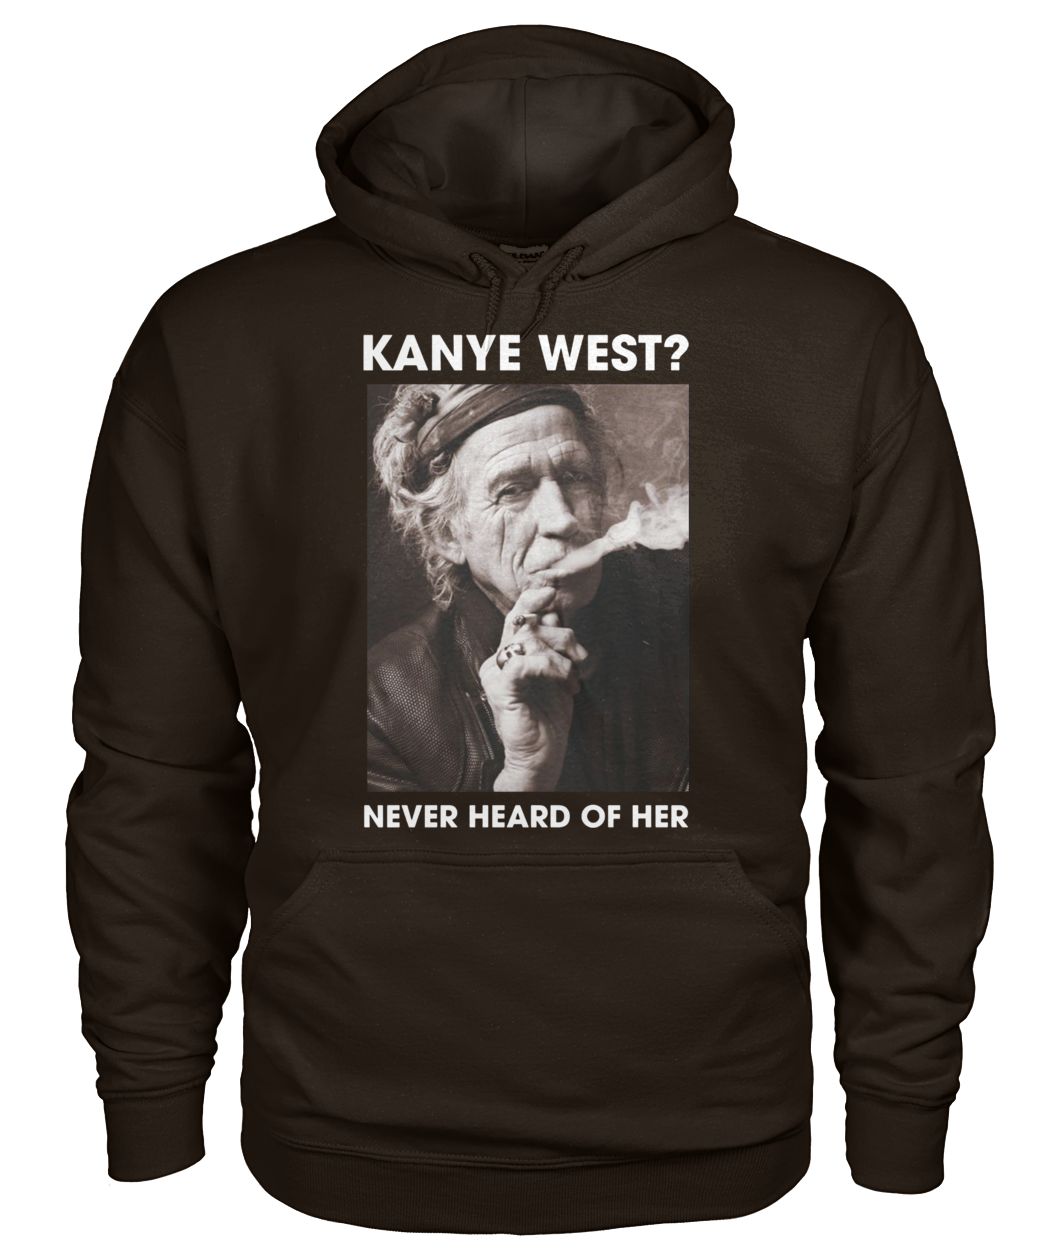 Keith richards kanye west never heard of her gildan hoodie